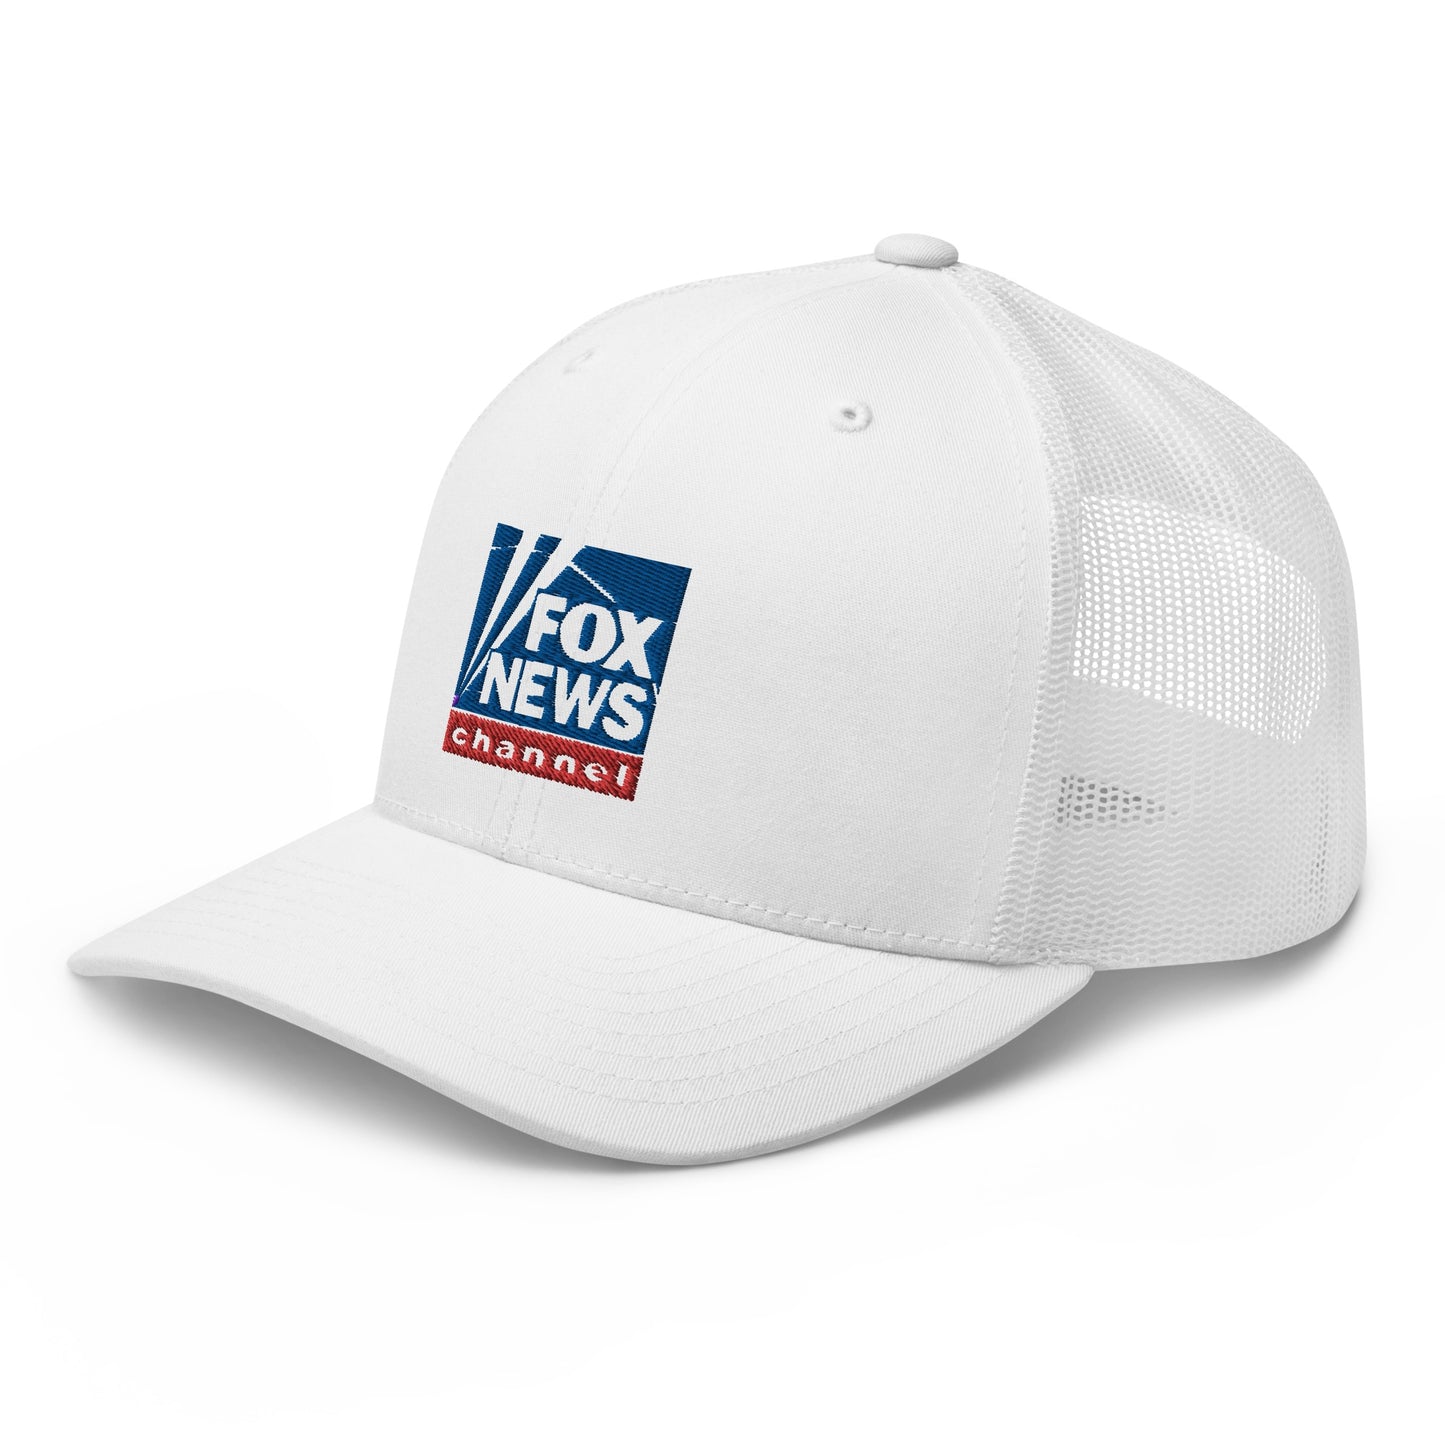 FOX News Logo Embroidered Retro Trucker Hat